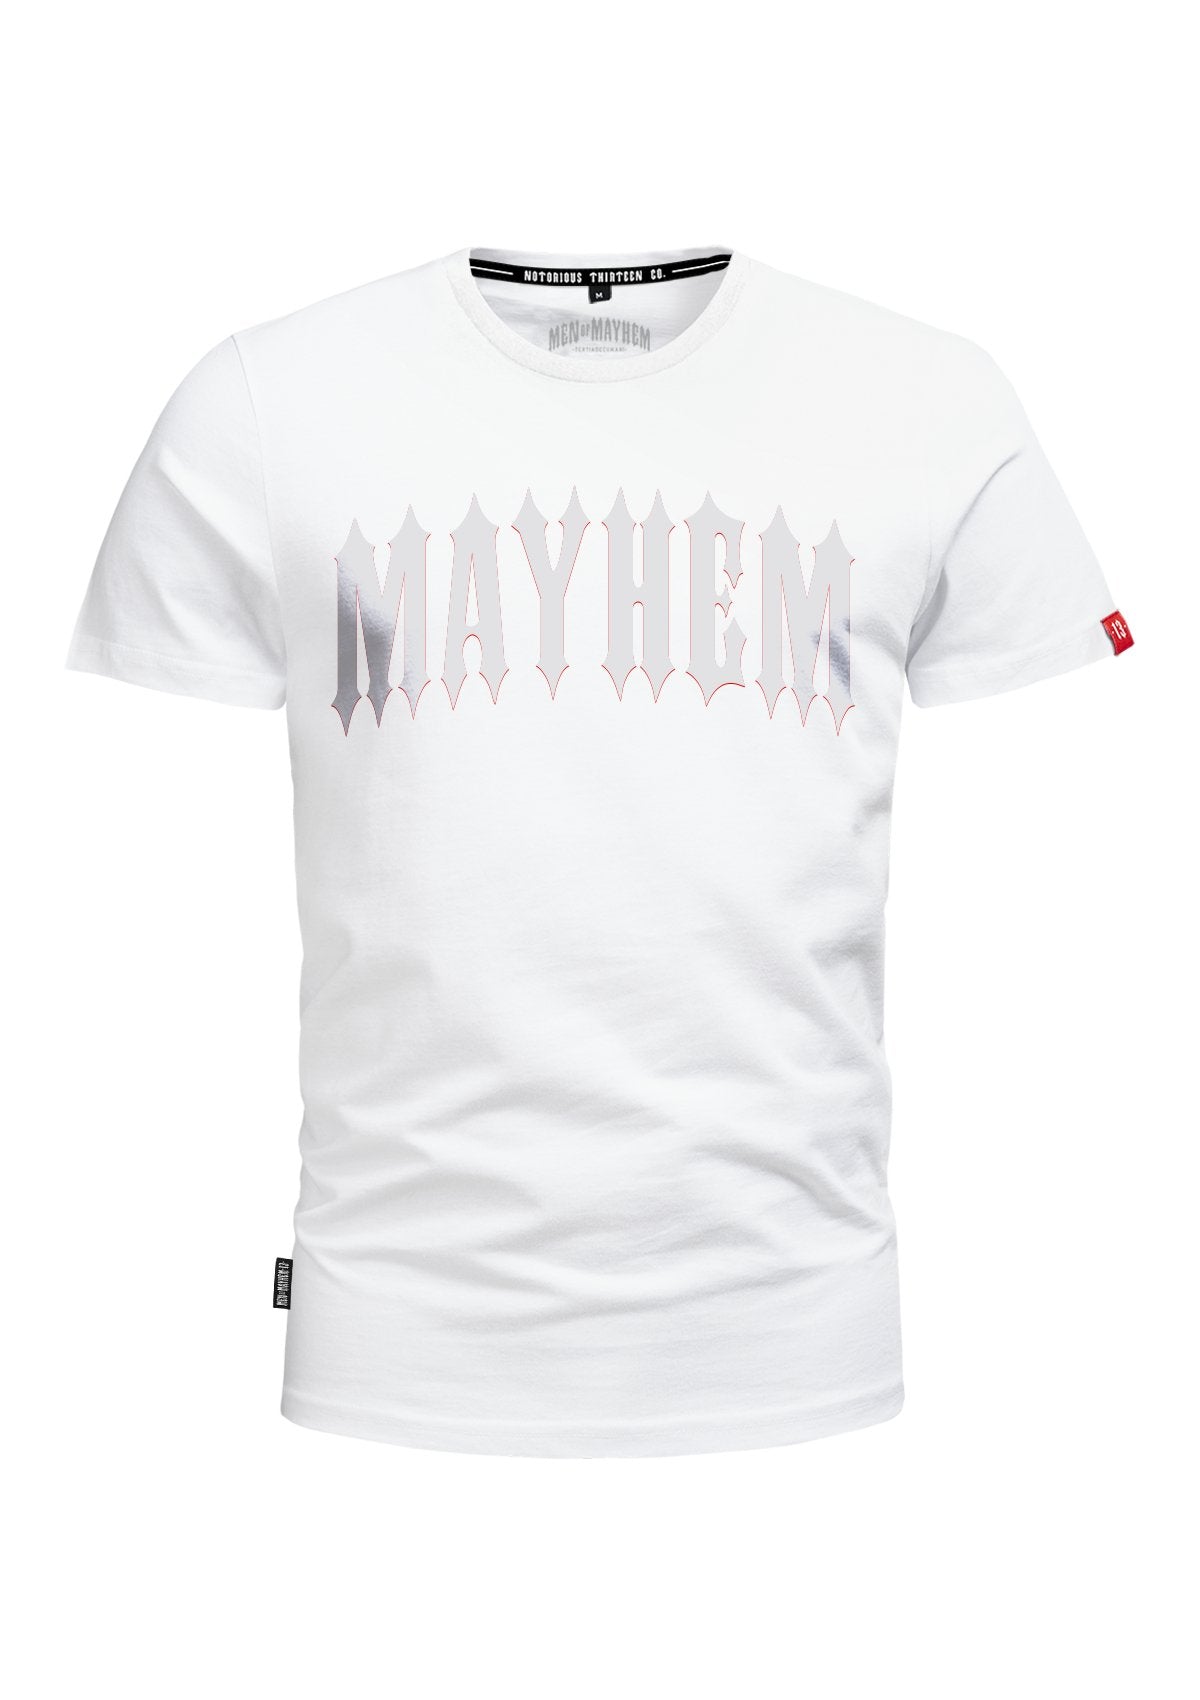 T-Shirt Mayhem 3D W/R - MEN OF MAYHEM - ALAIKO-EXCHANGES-MM-M-1010-MAW-WR - Men - T-Shirts